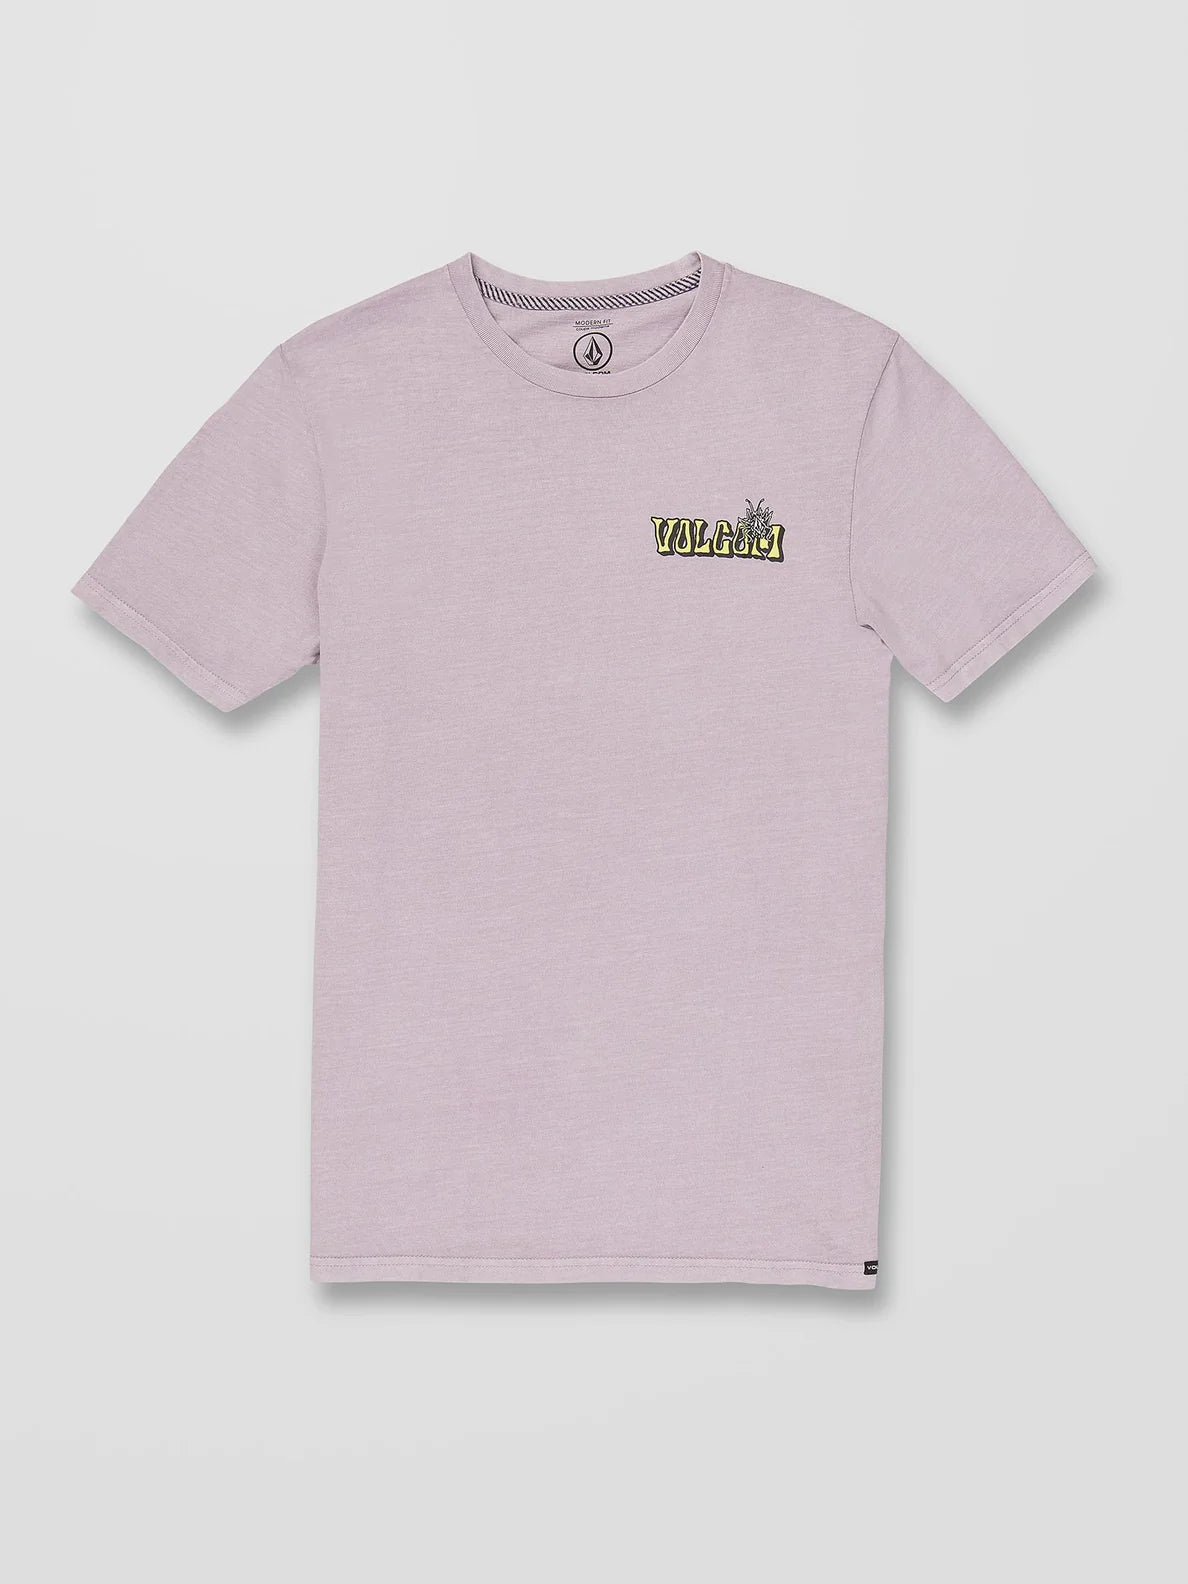 T-shirt Volcom Blox Niagara | Nouveaux produits | Produits les plus récents | Produits les plus vendus | surfdevils.com